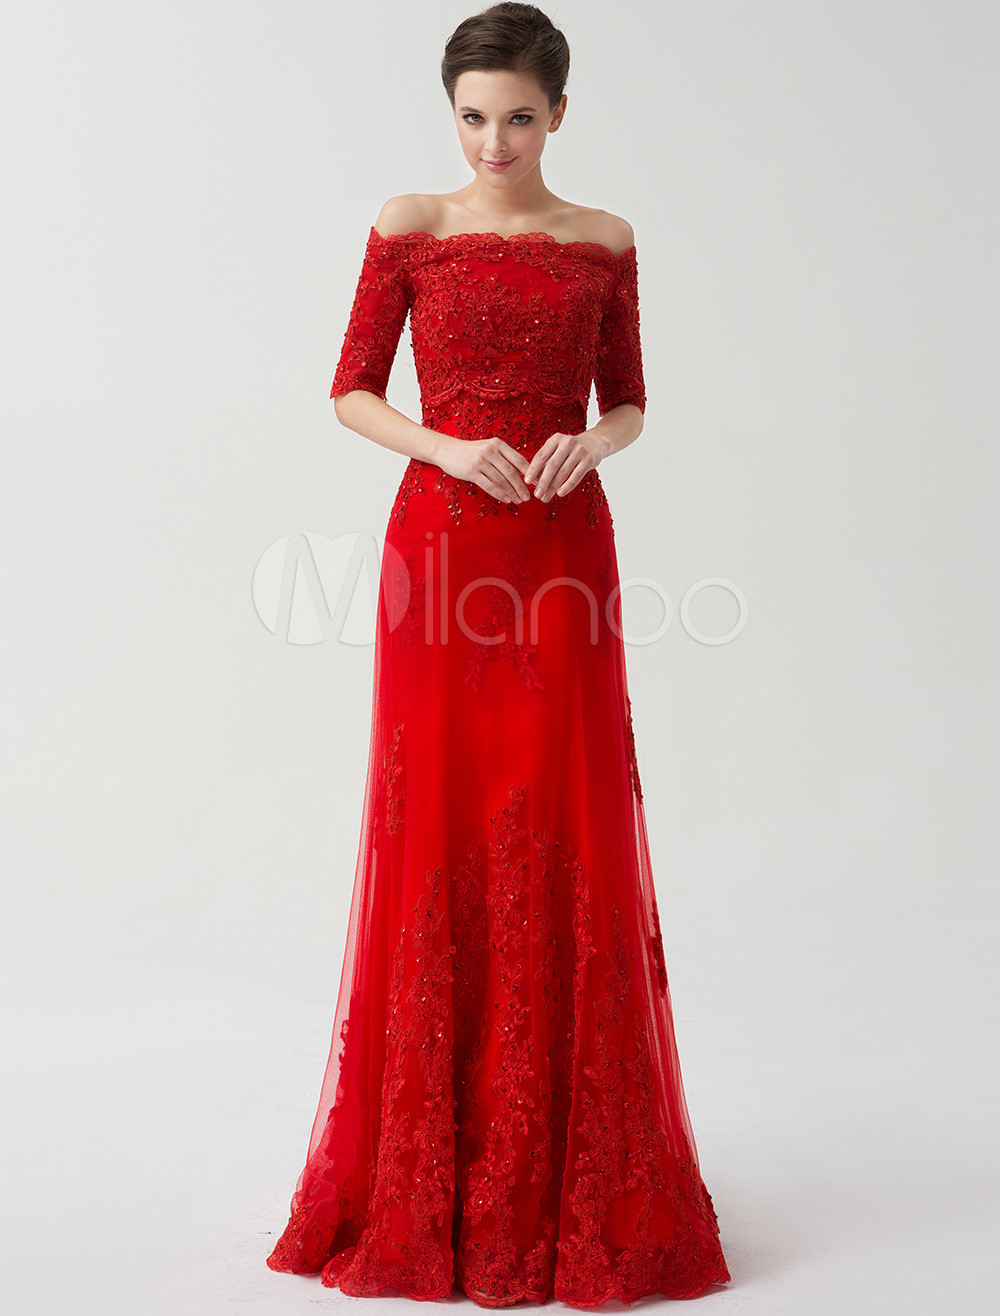 Red Wedding Dresses Off The Shoulder Bridal Dress Lace Applique Half Sleeve Sequin Floor Length Formal Evening Gowns photo